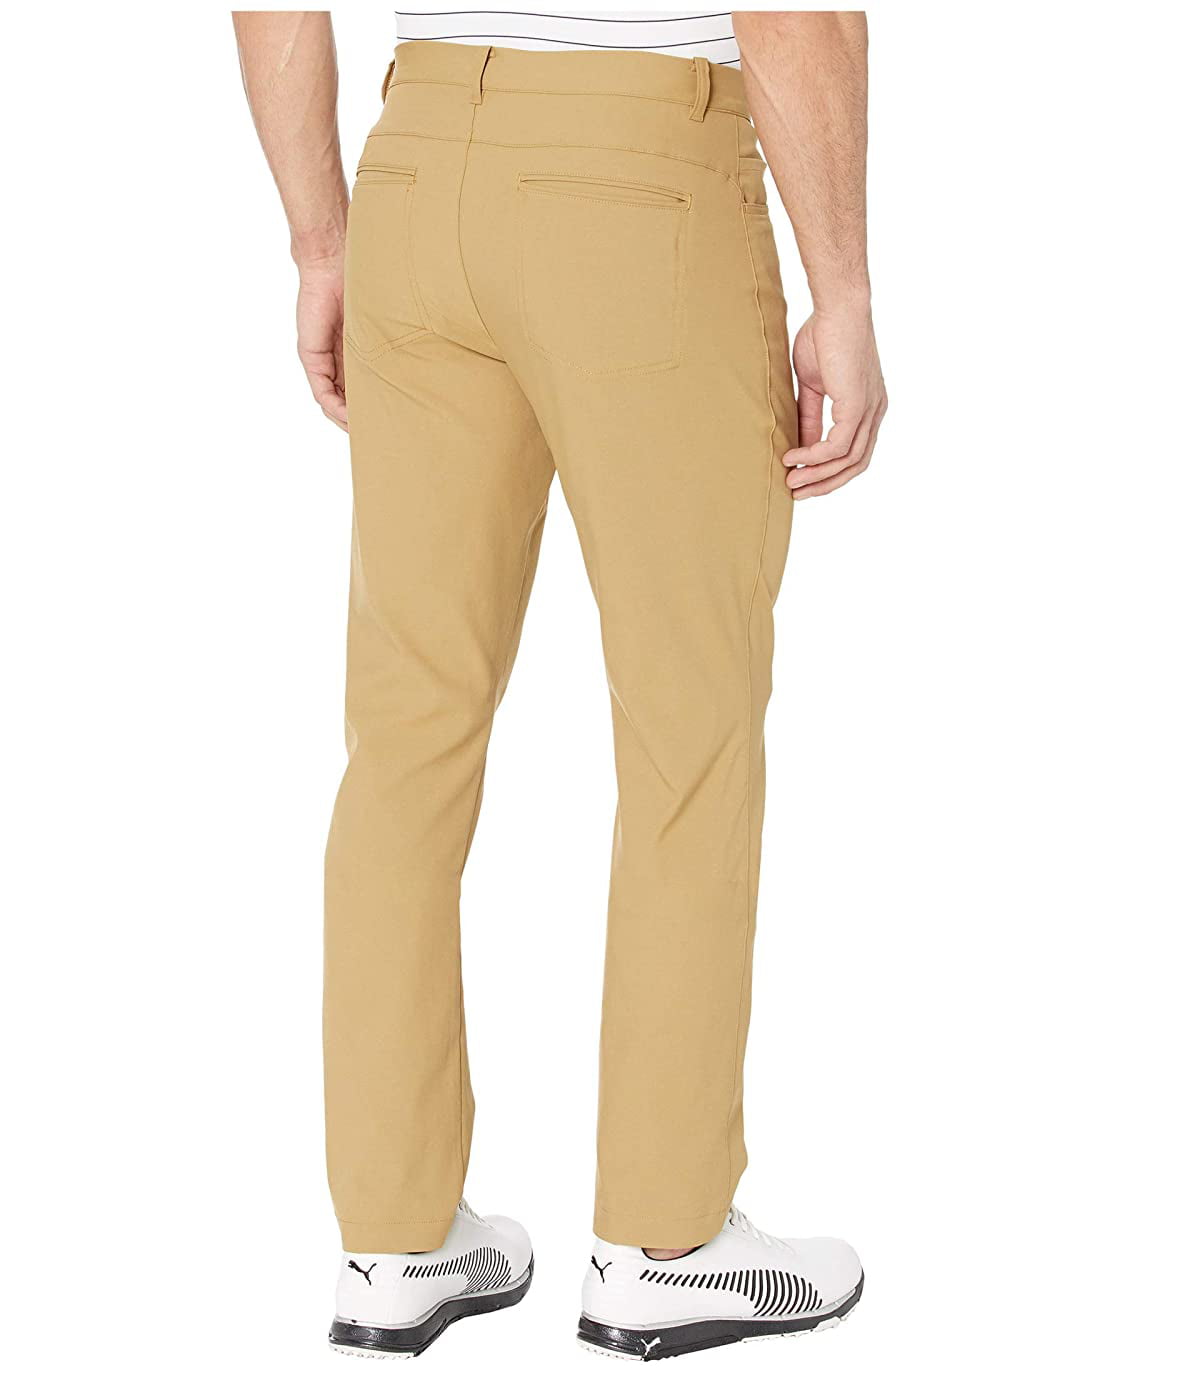 puma 5 pocket golf pants